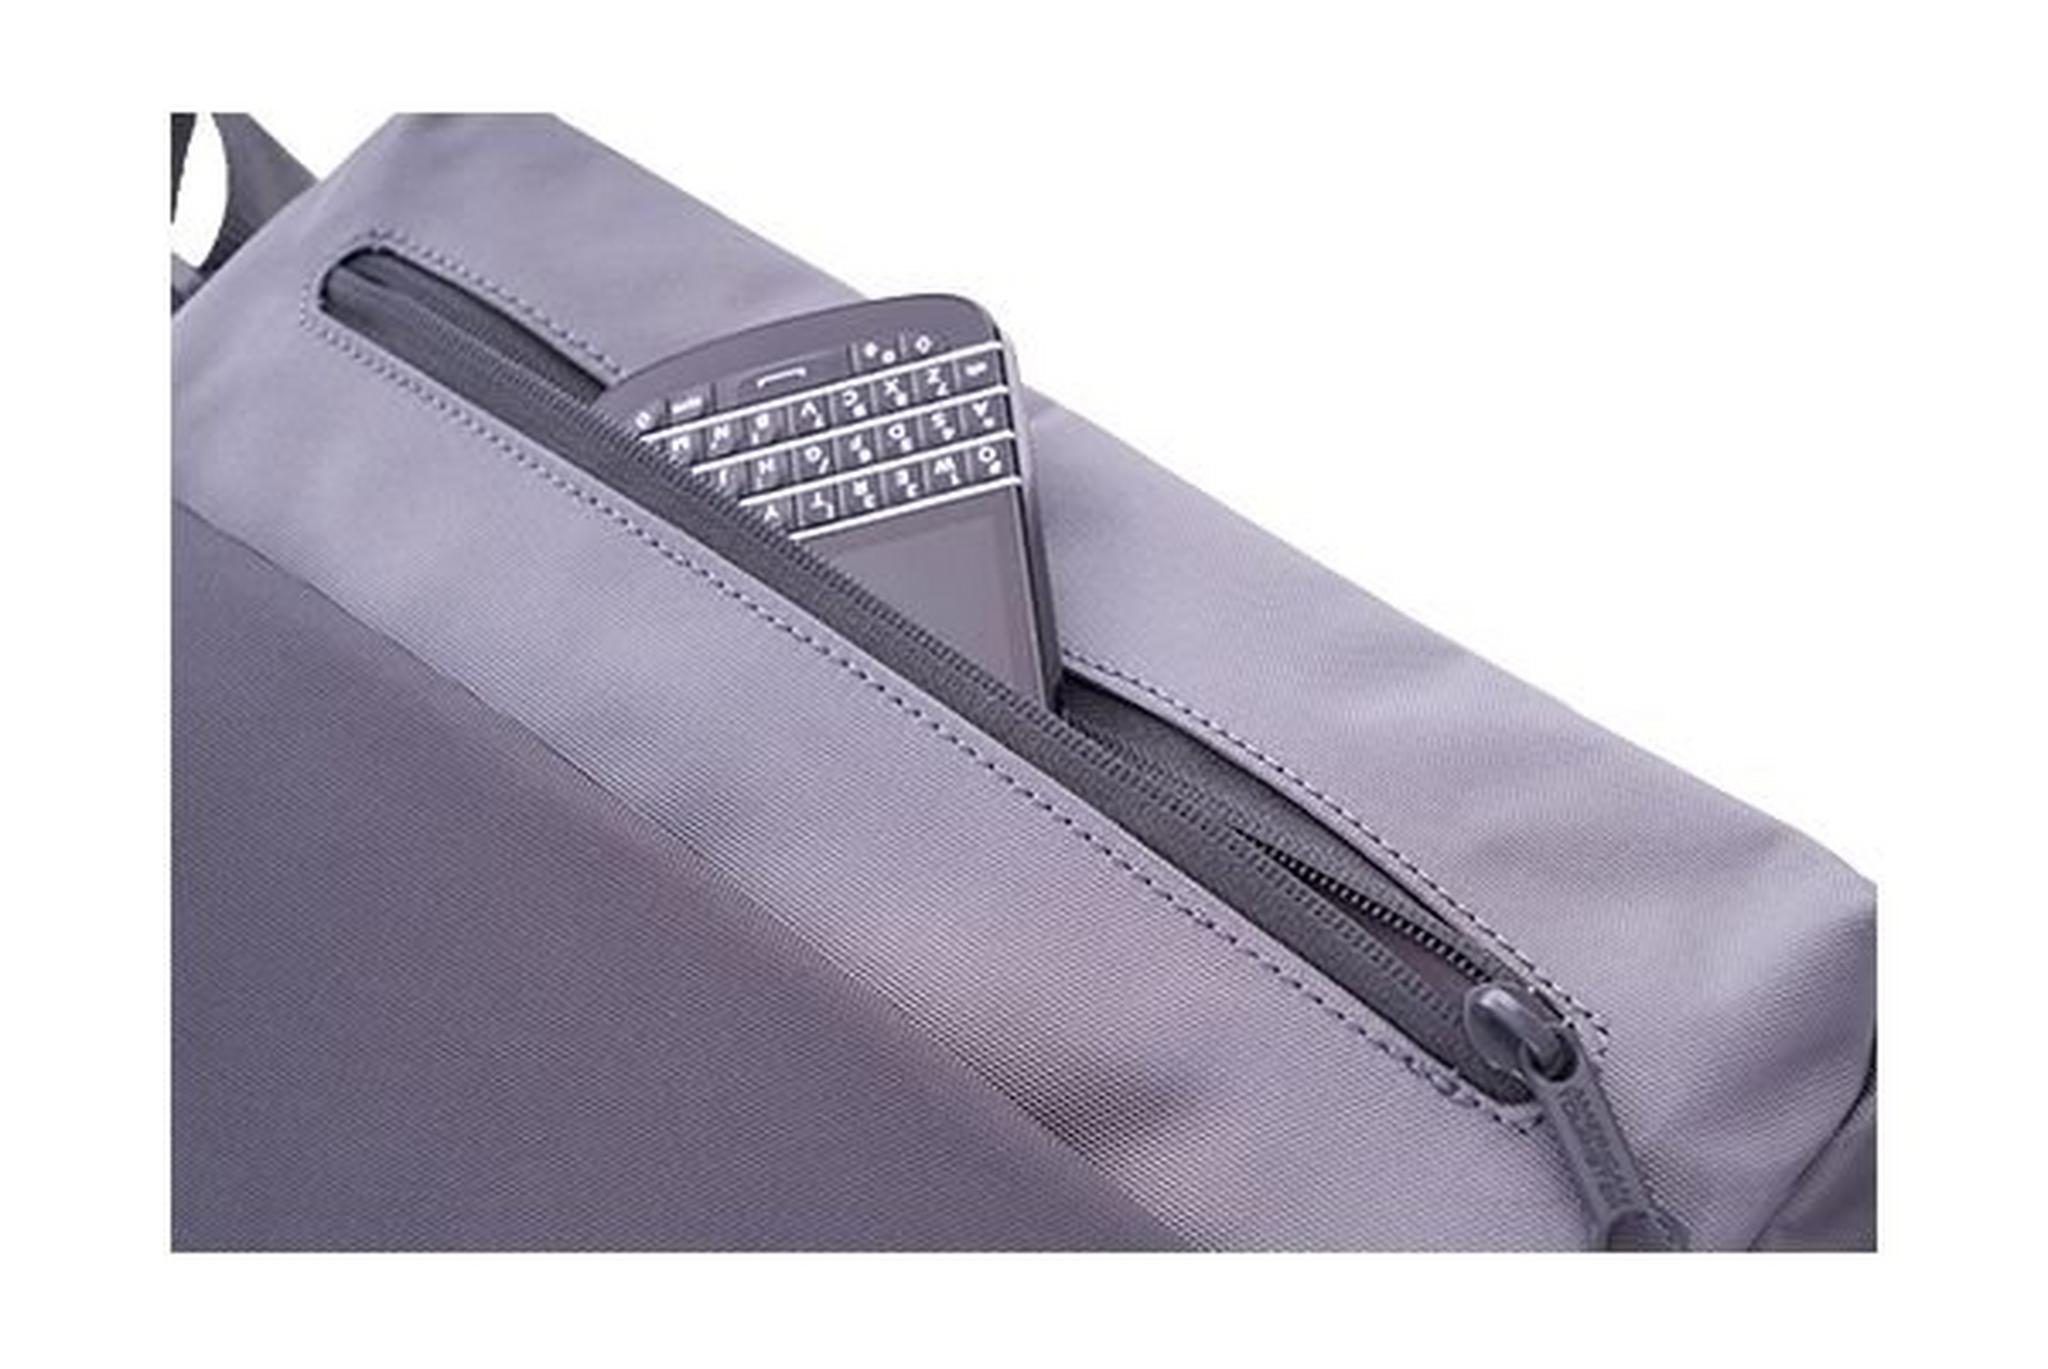 American Tourister Brixton Shoulder Bag (95SX18001) - Grey/Black